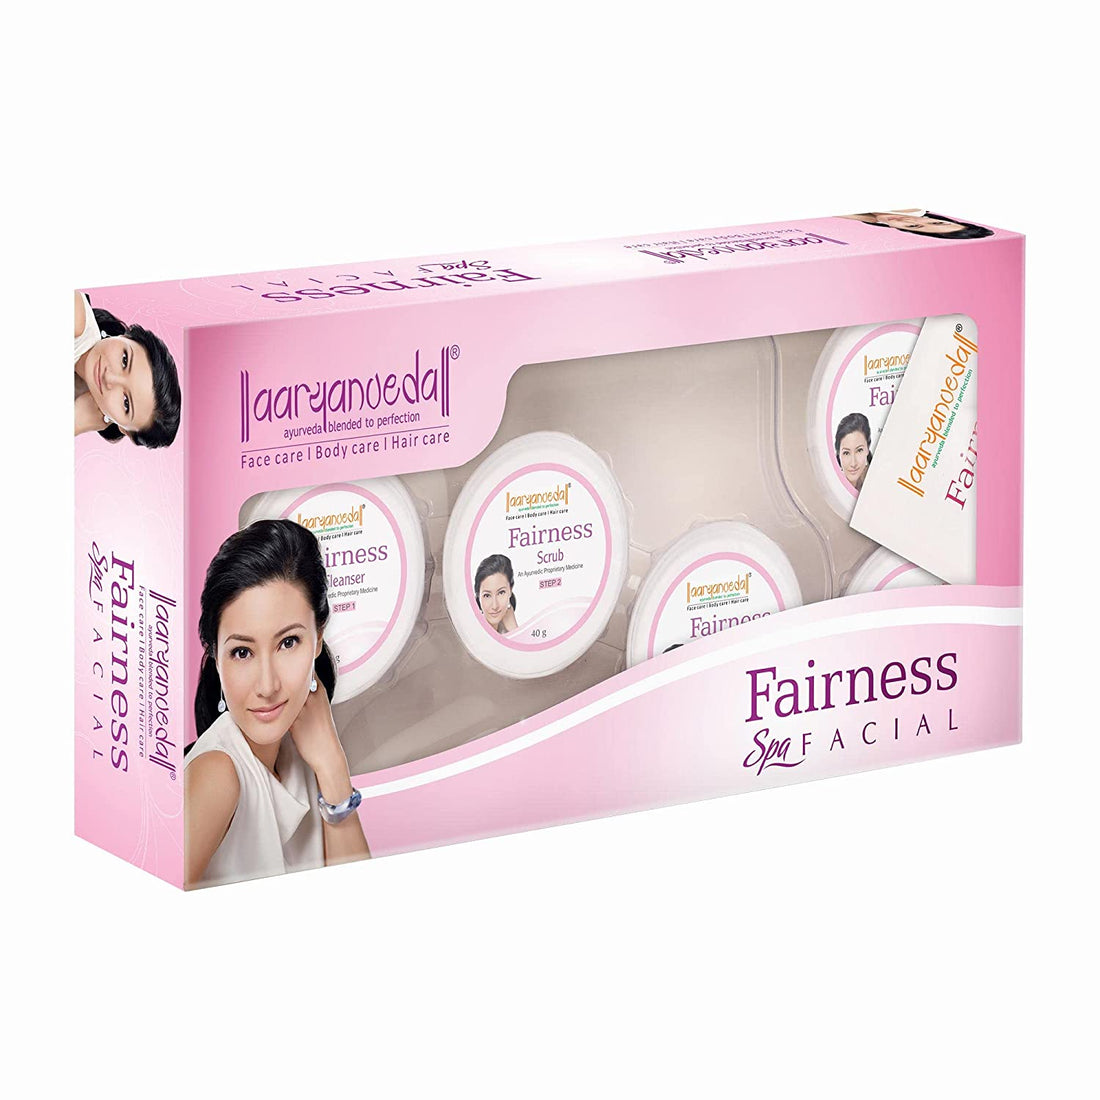 Aaryanveda Fairness Facial Kit